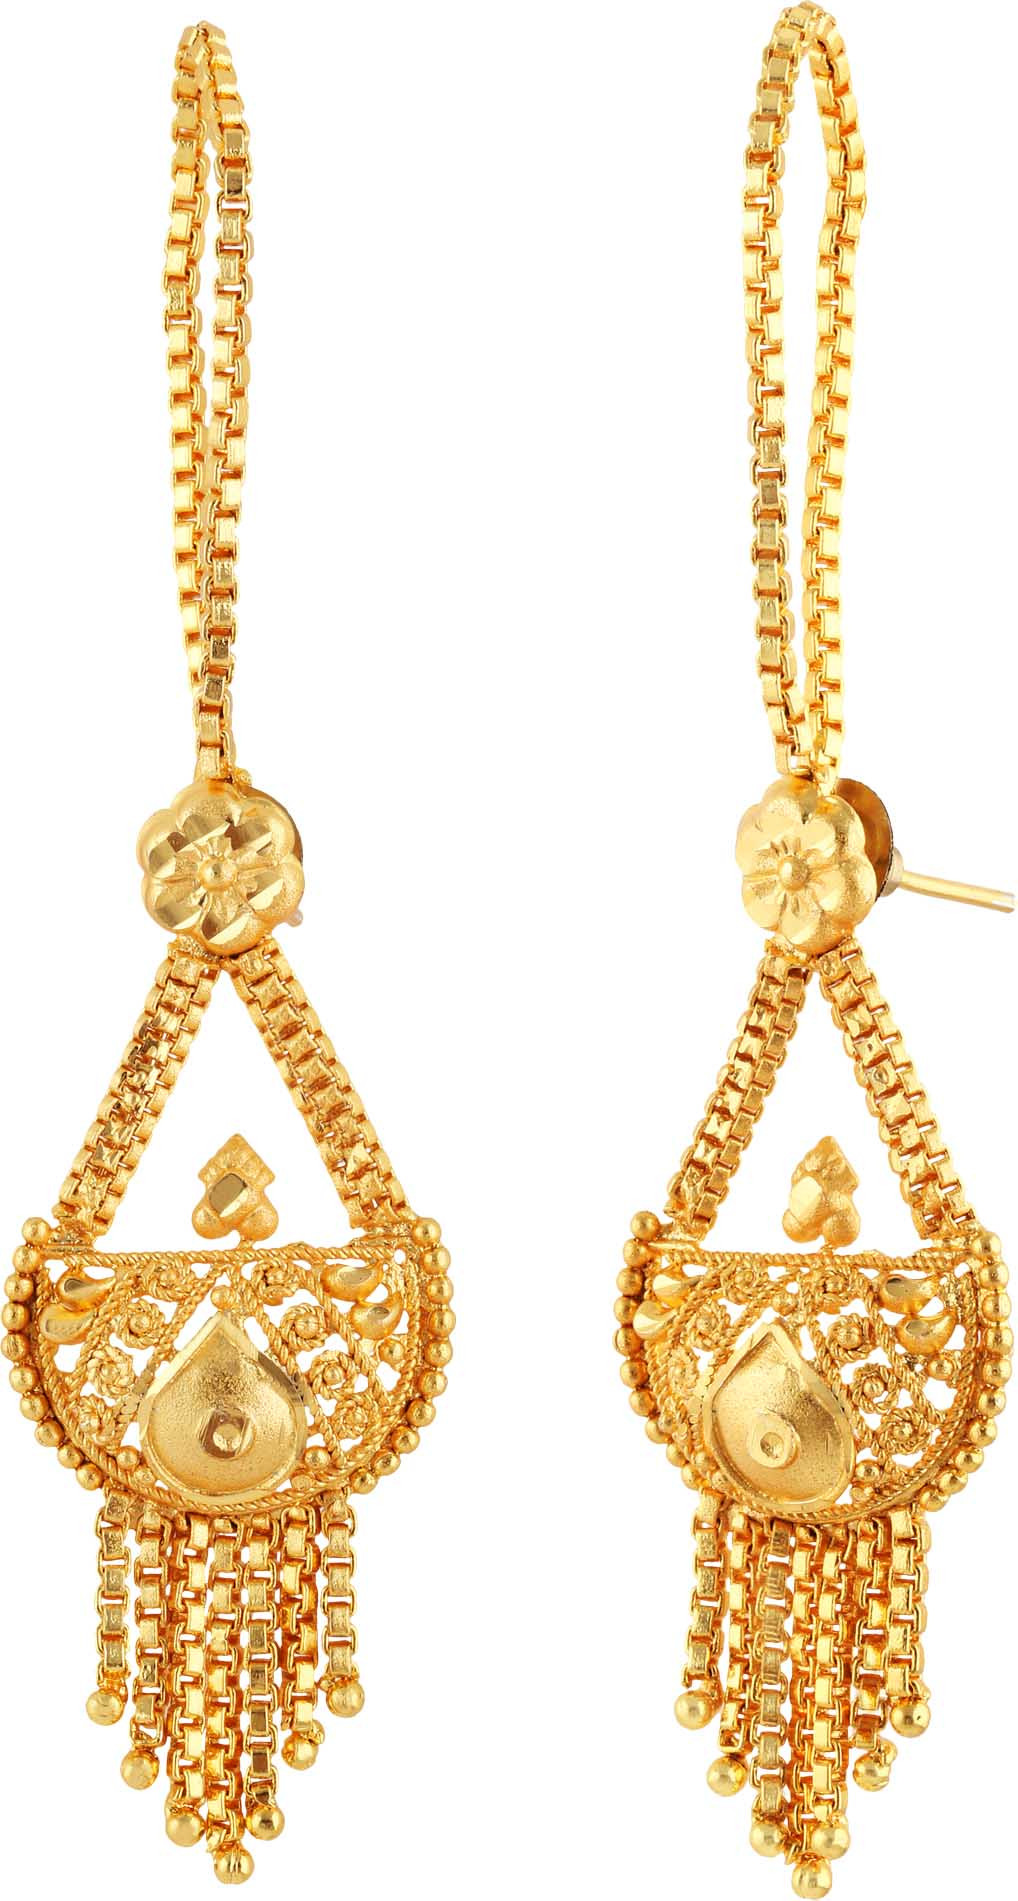 Buy 18K Gold Plated Fashion Necklace Set - MJ079 Gold ...